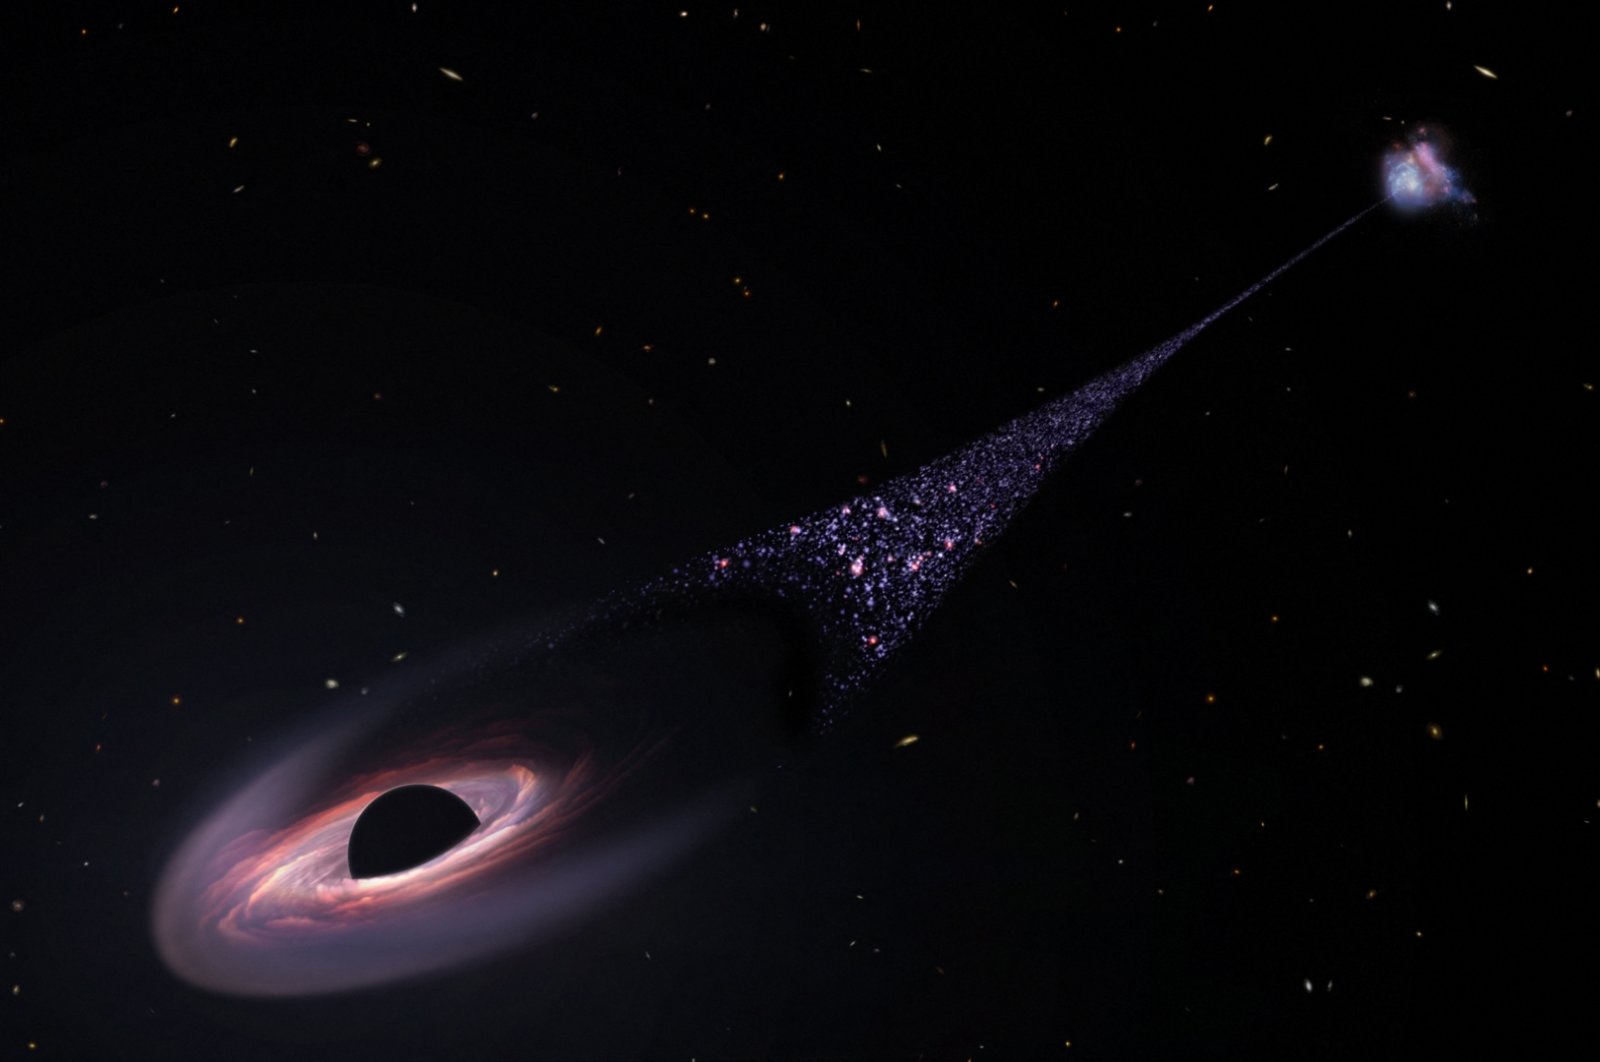 Lubang hitam supermasif mengamuk di angkasa, membuntuti bintang-bintang baru